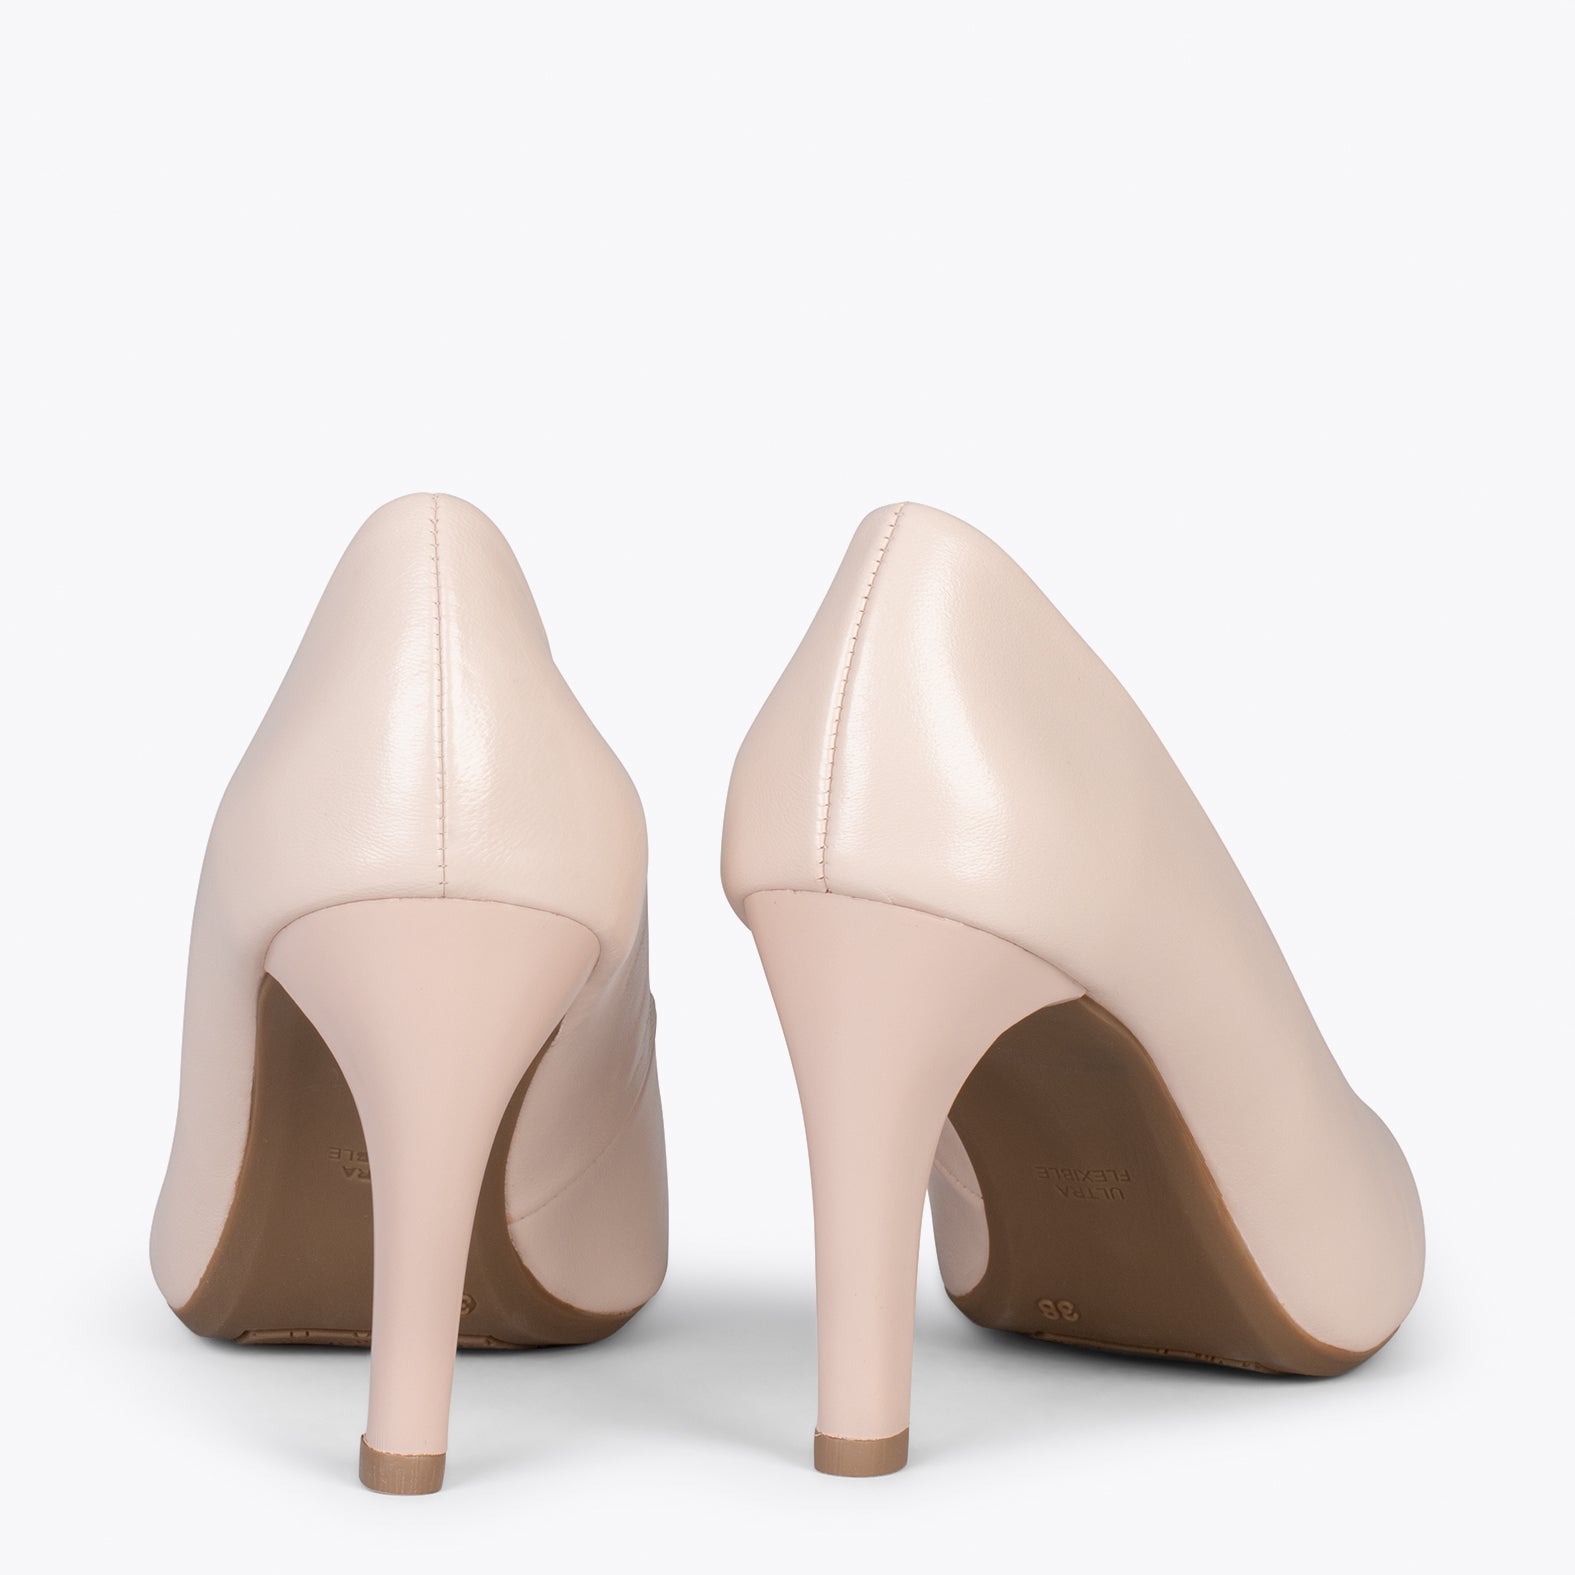 GLAM – Zapatos elegantes de tacón alto NUDE